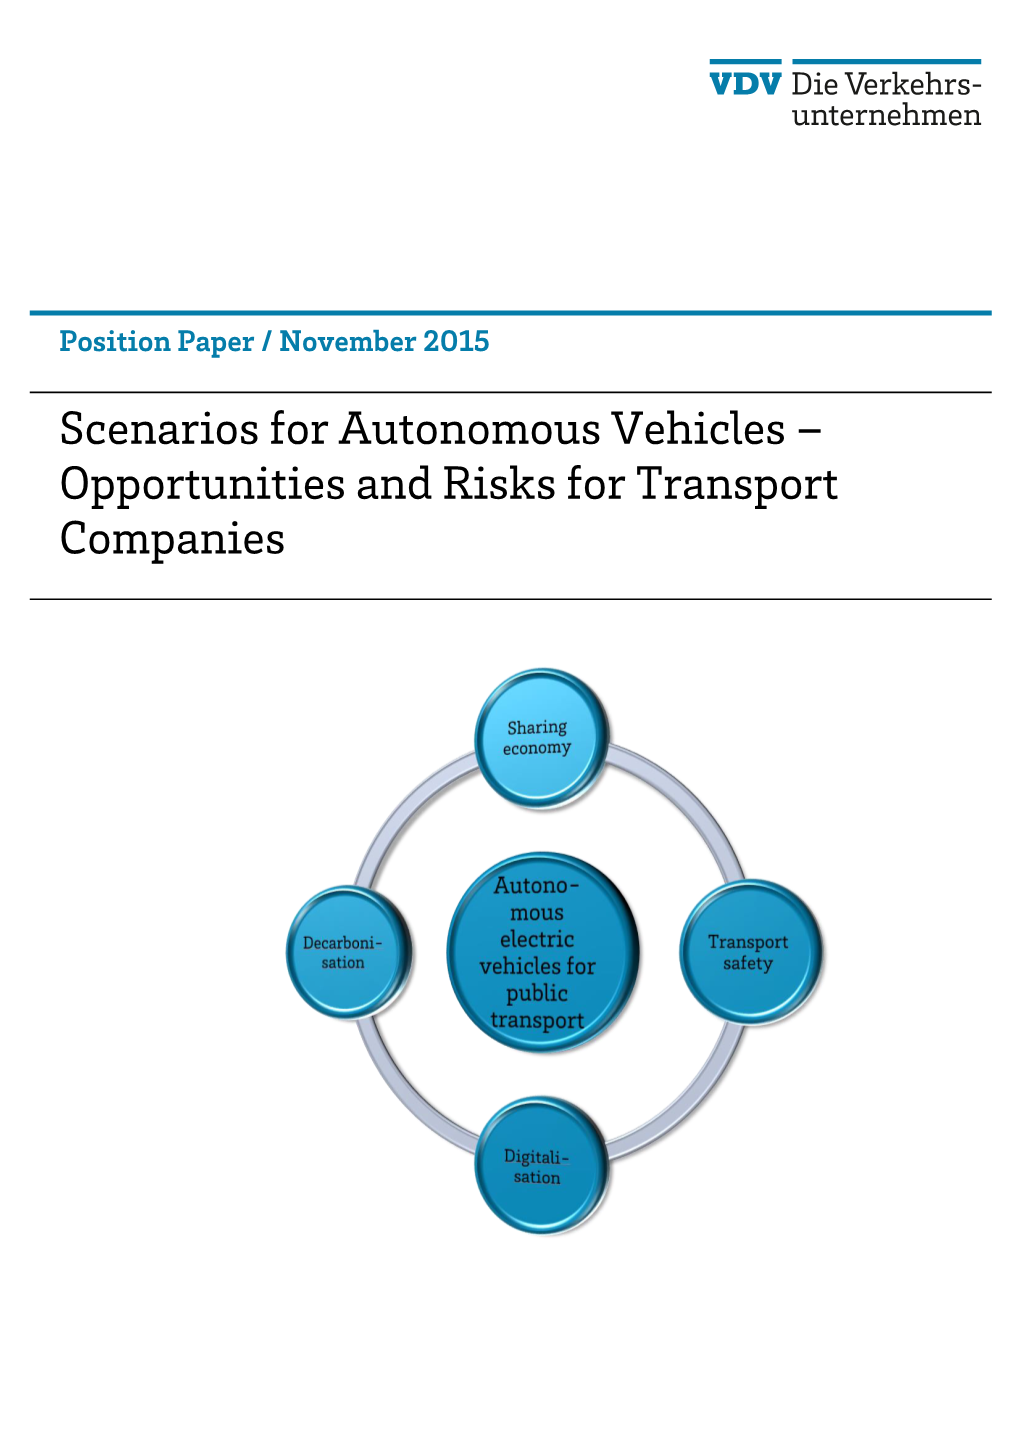 Scenarios for Autonomous Vehicles – Opportunities and Risks for Transport Companies